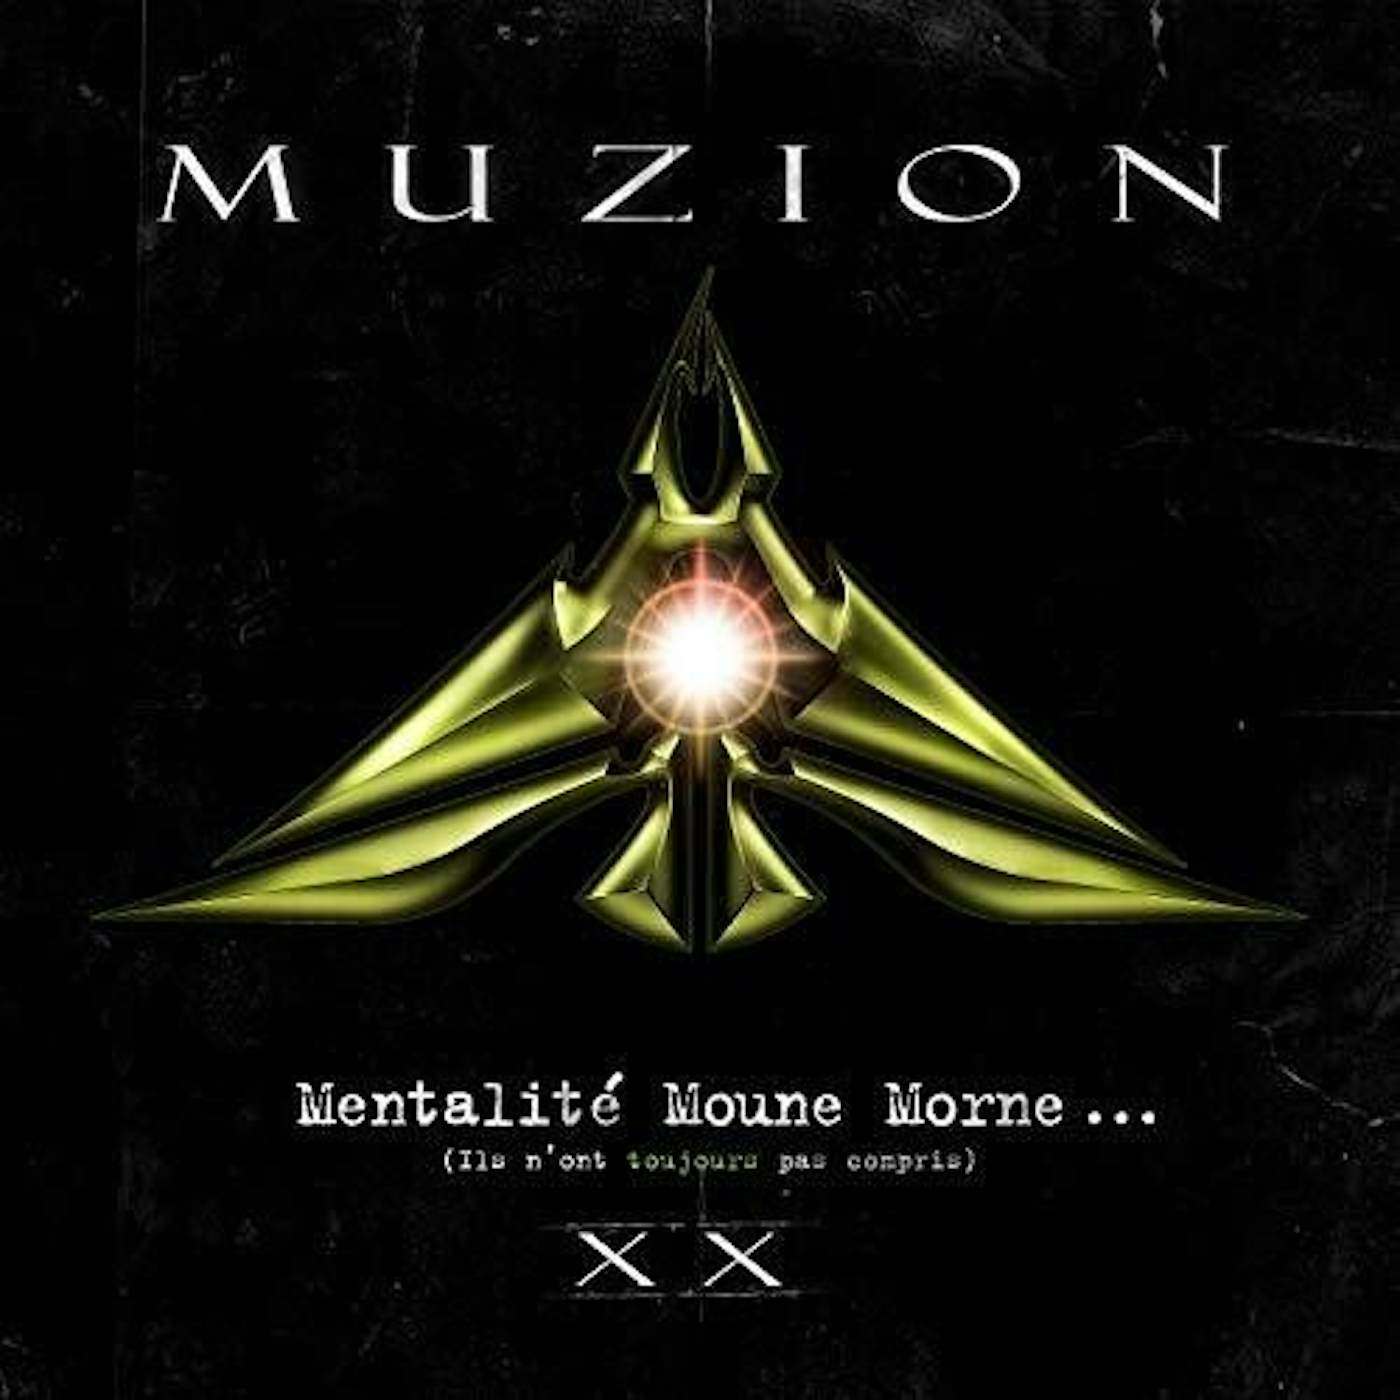 Muzion MENTALITE MOUNE MORNE (ILS N'ONT TOUJOURS PAS) Vinyl Record